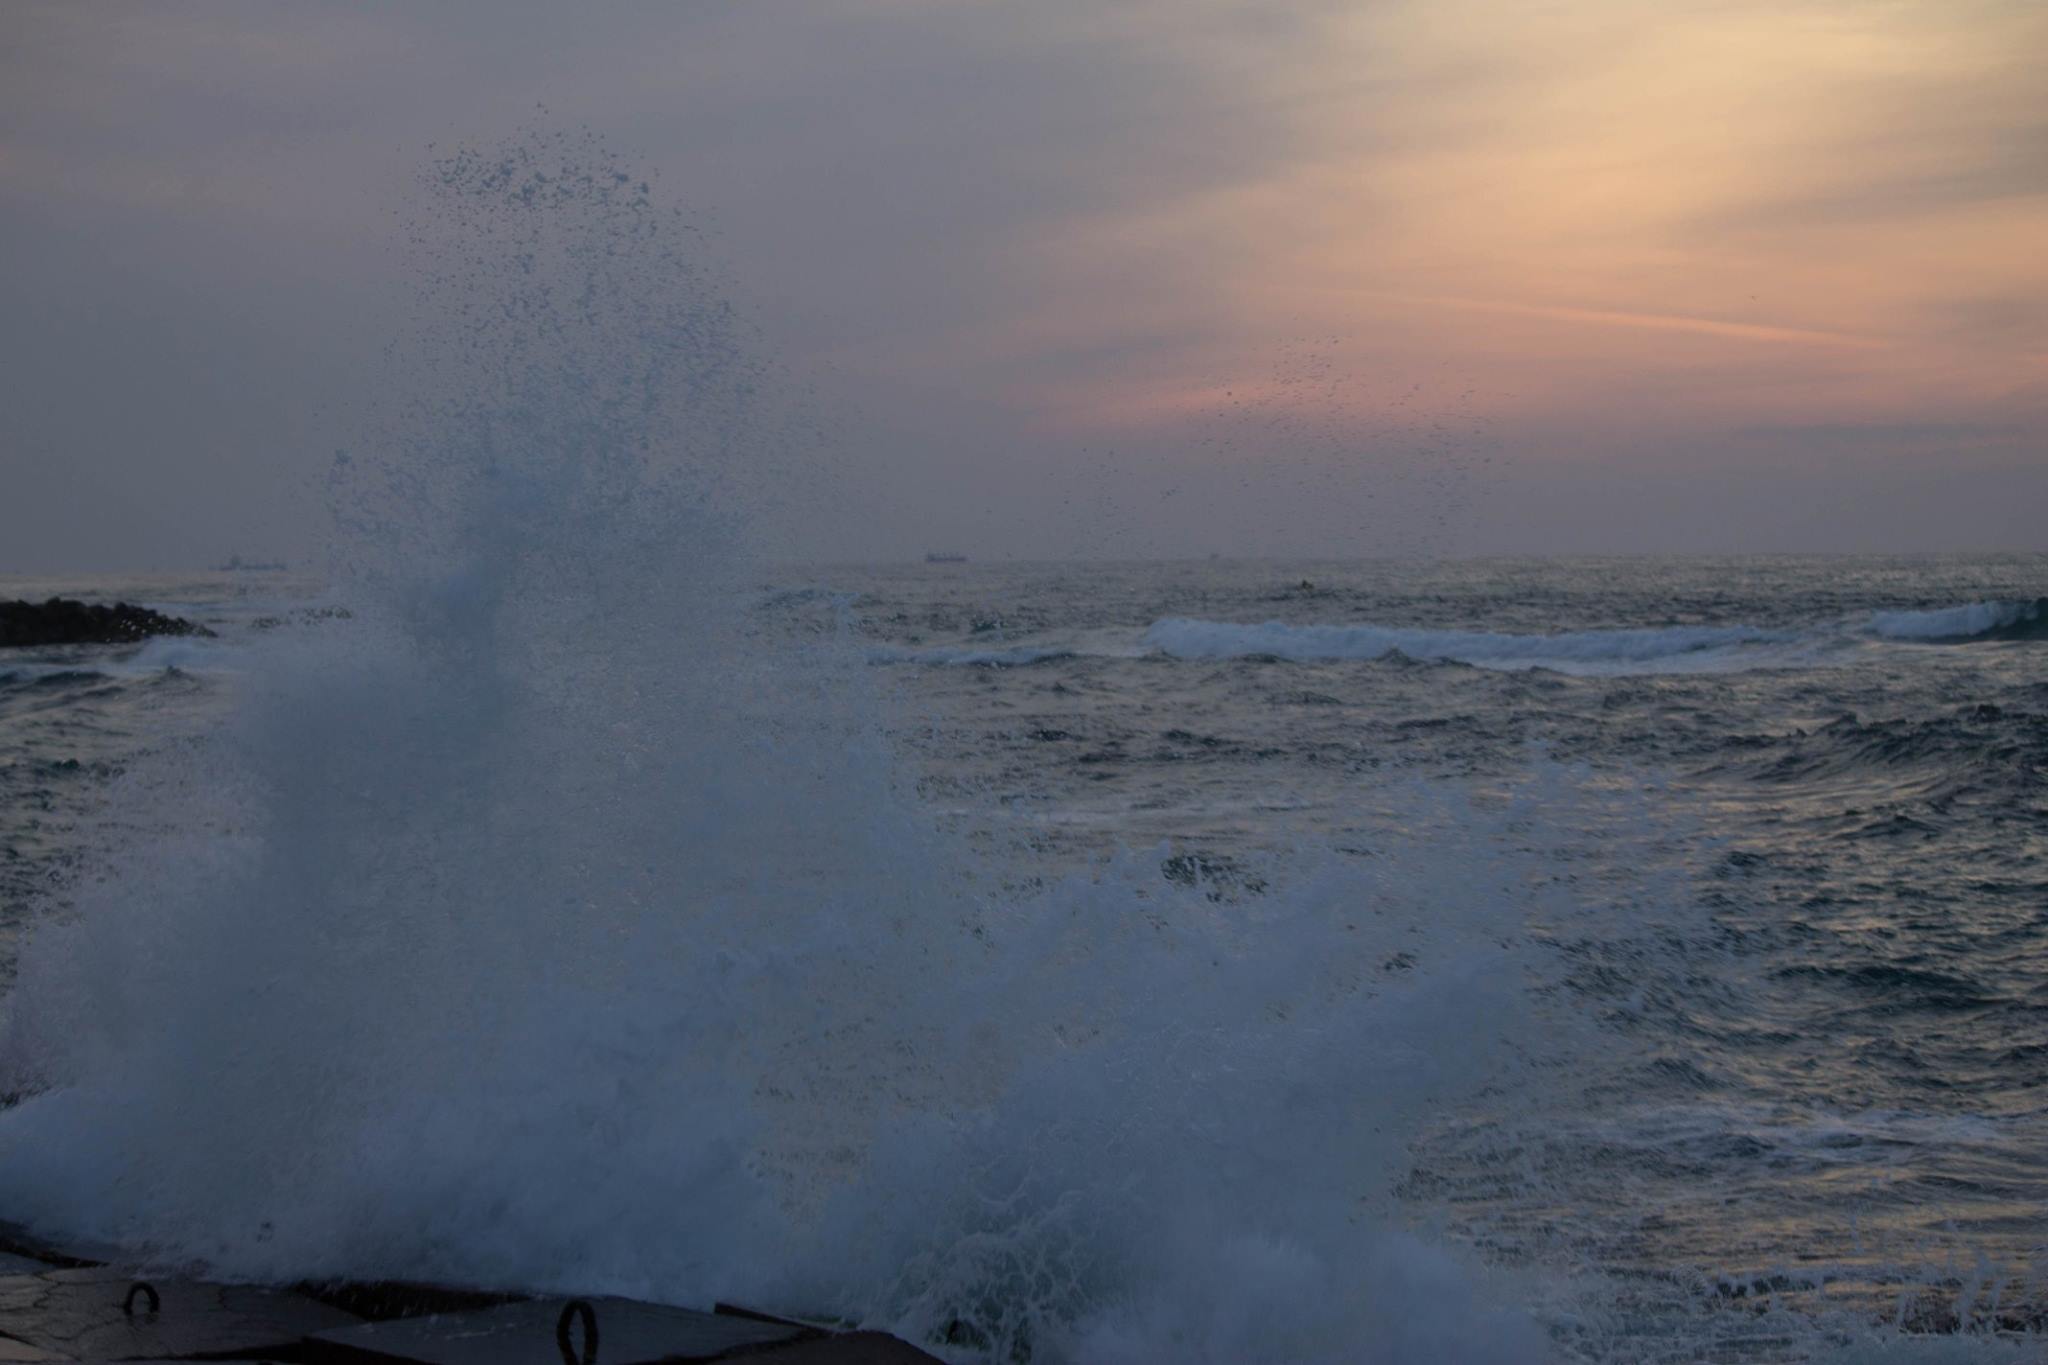 Splashing waves photo